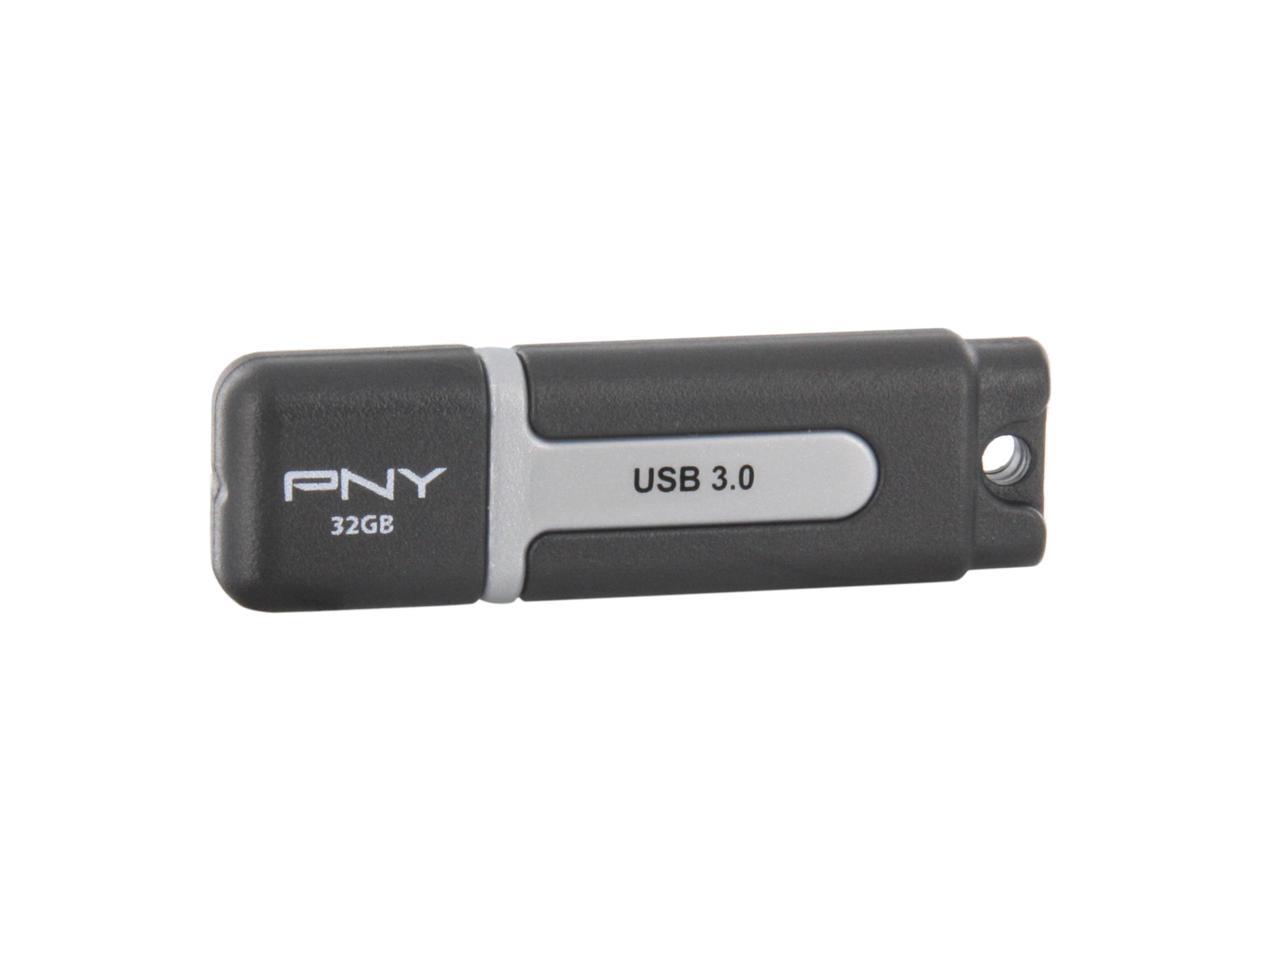 pny 256gb flash drive shows as 32gb